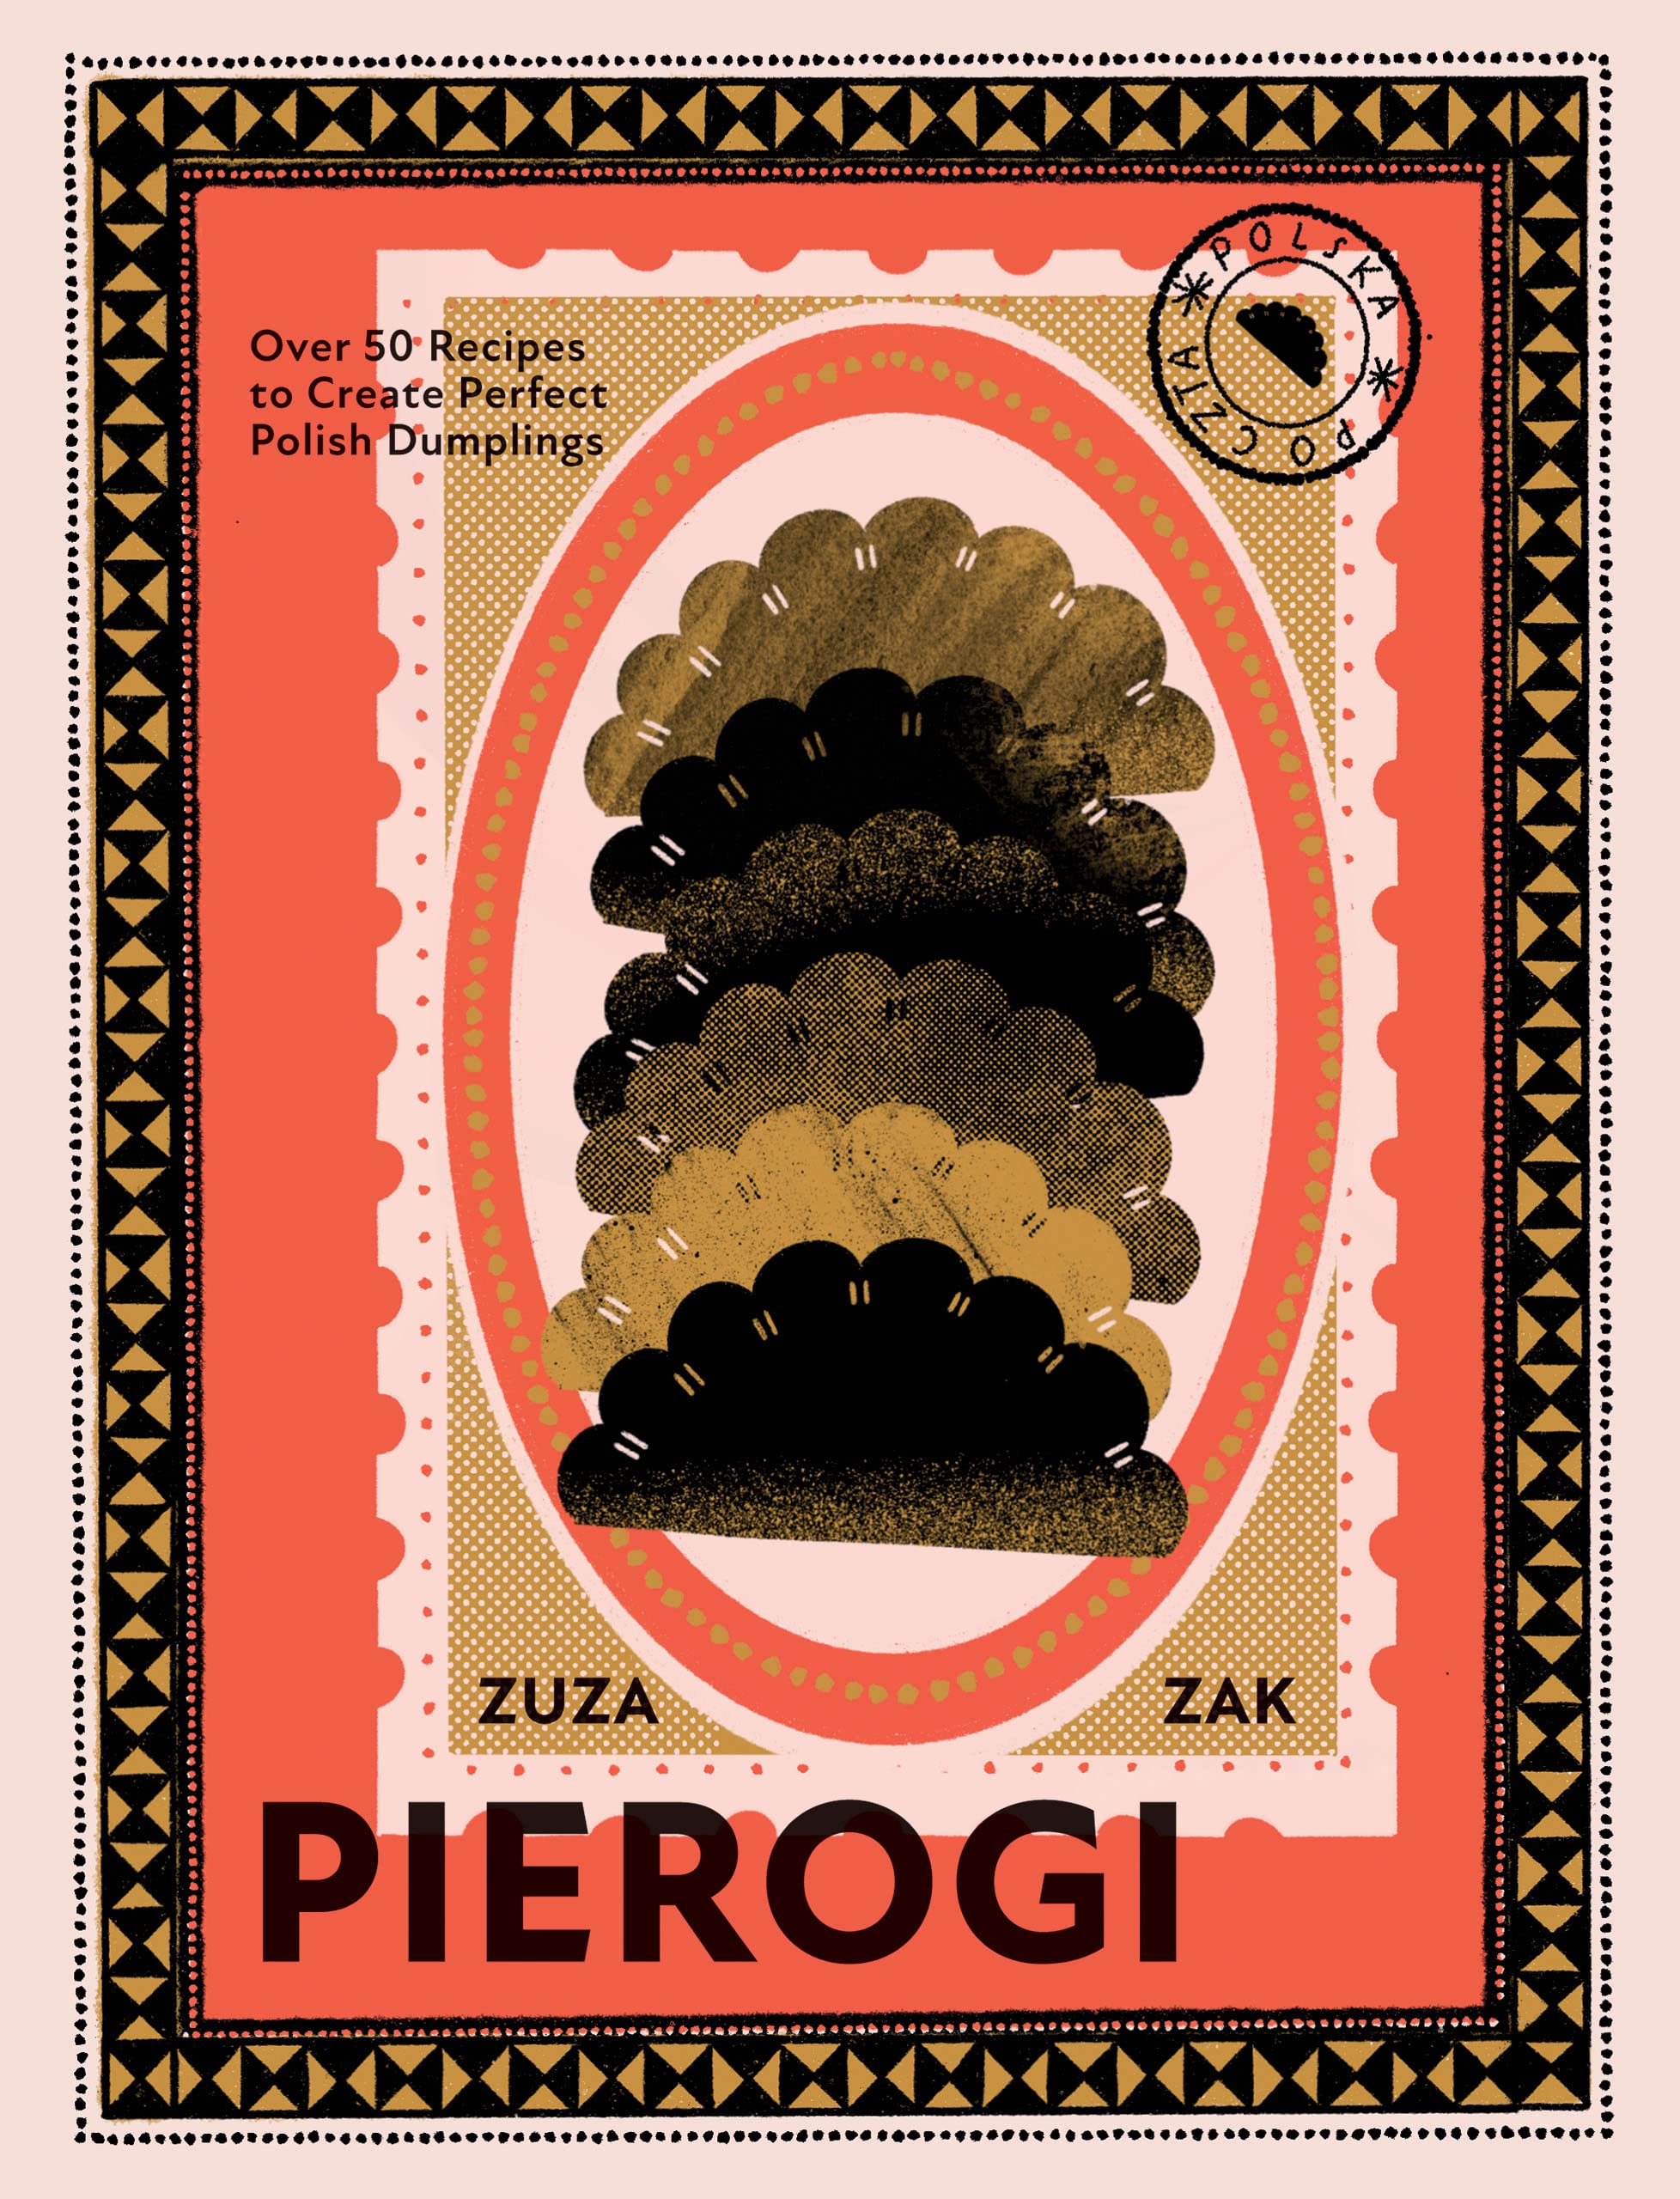 Pierogi: Over 50 Recipes to Create Perfect Polish Dumplings (Zuza Zak)